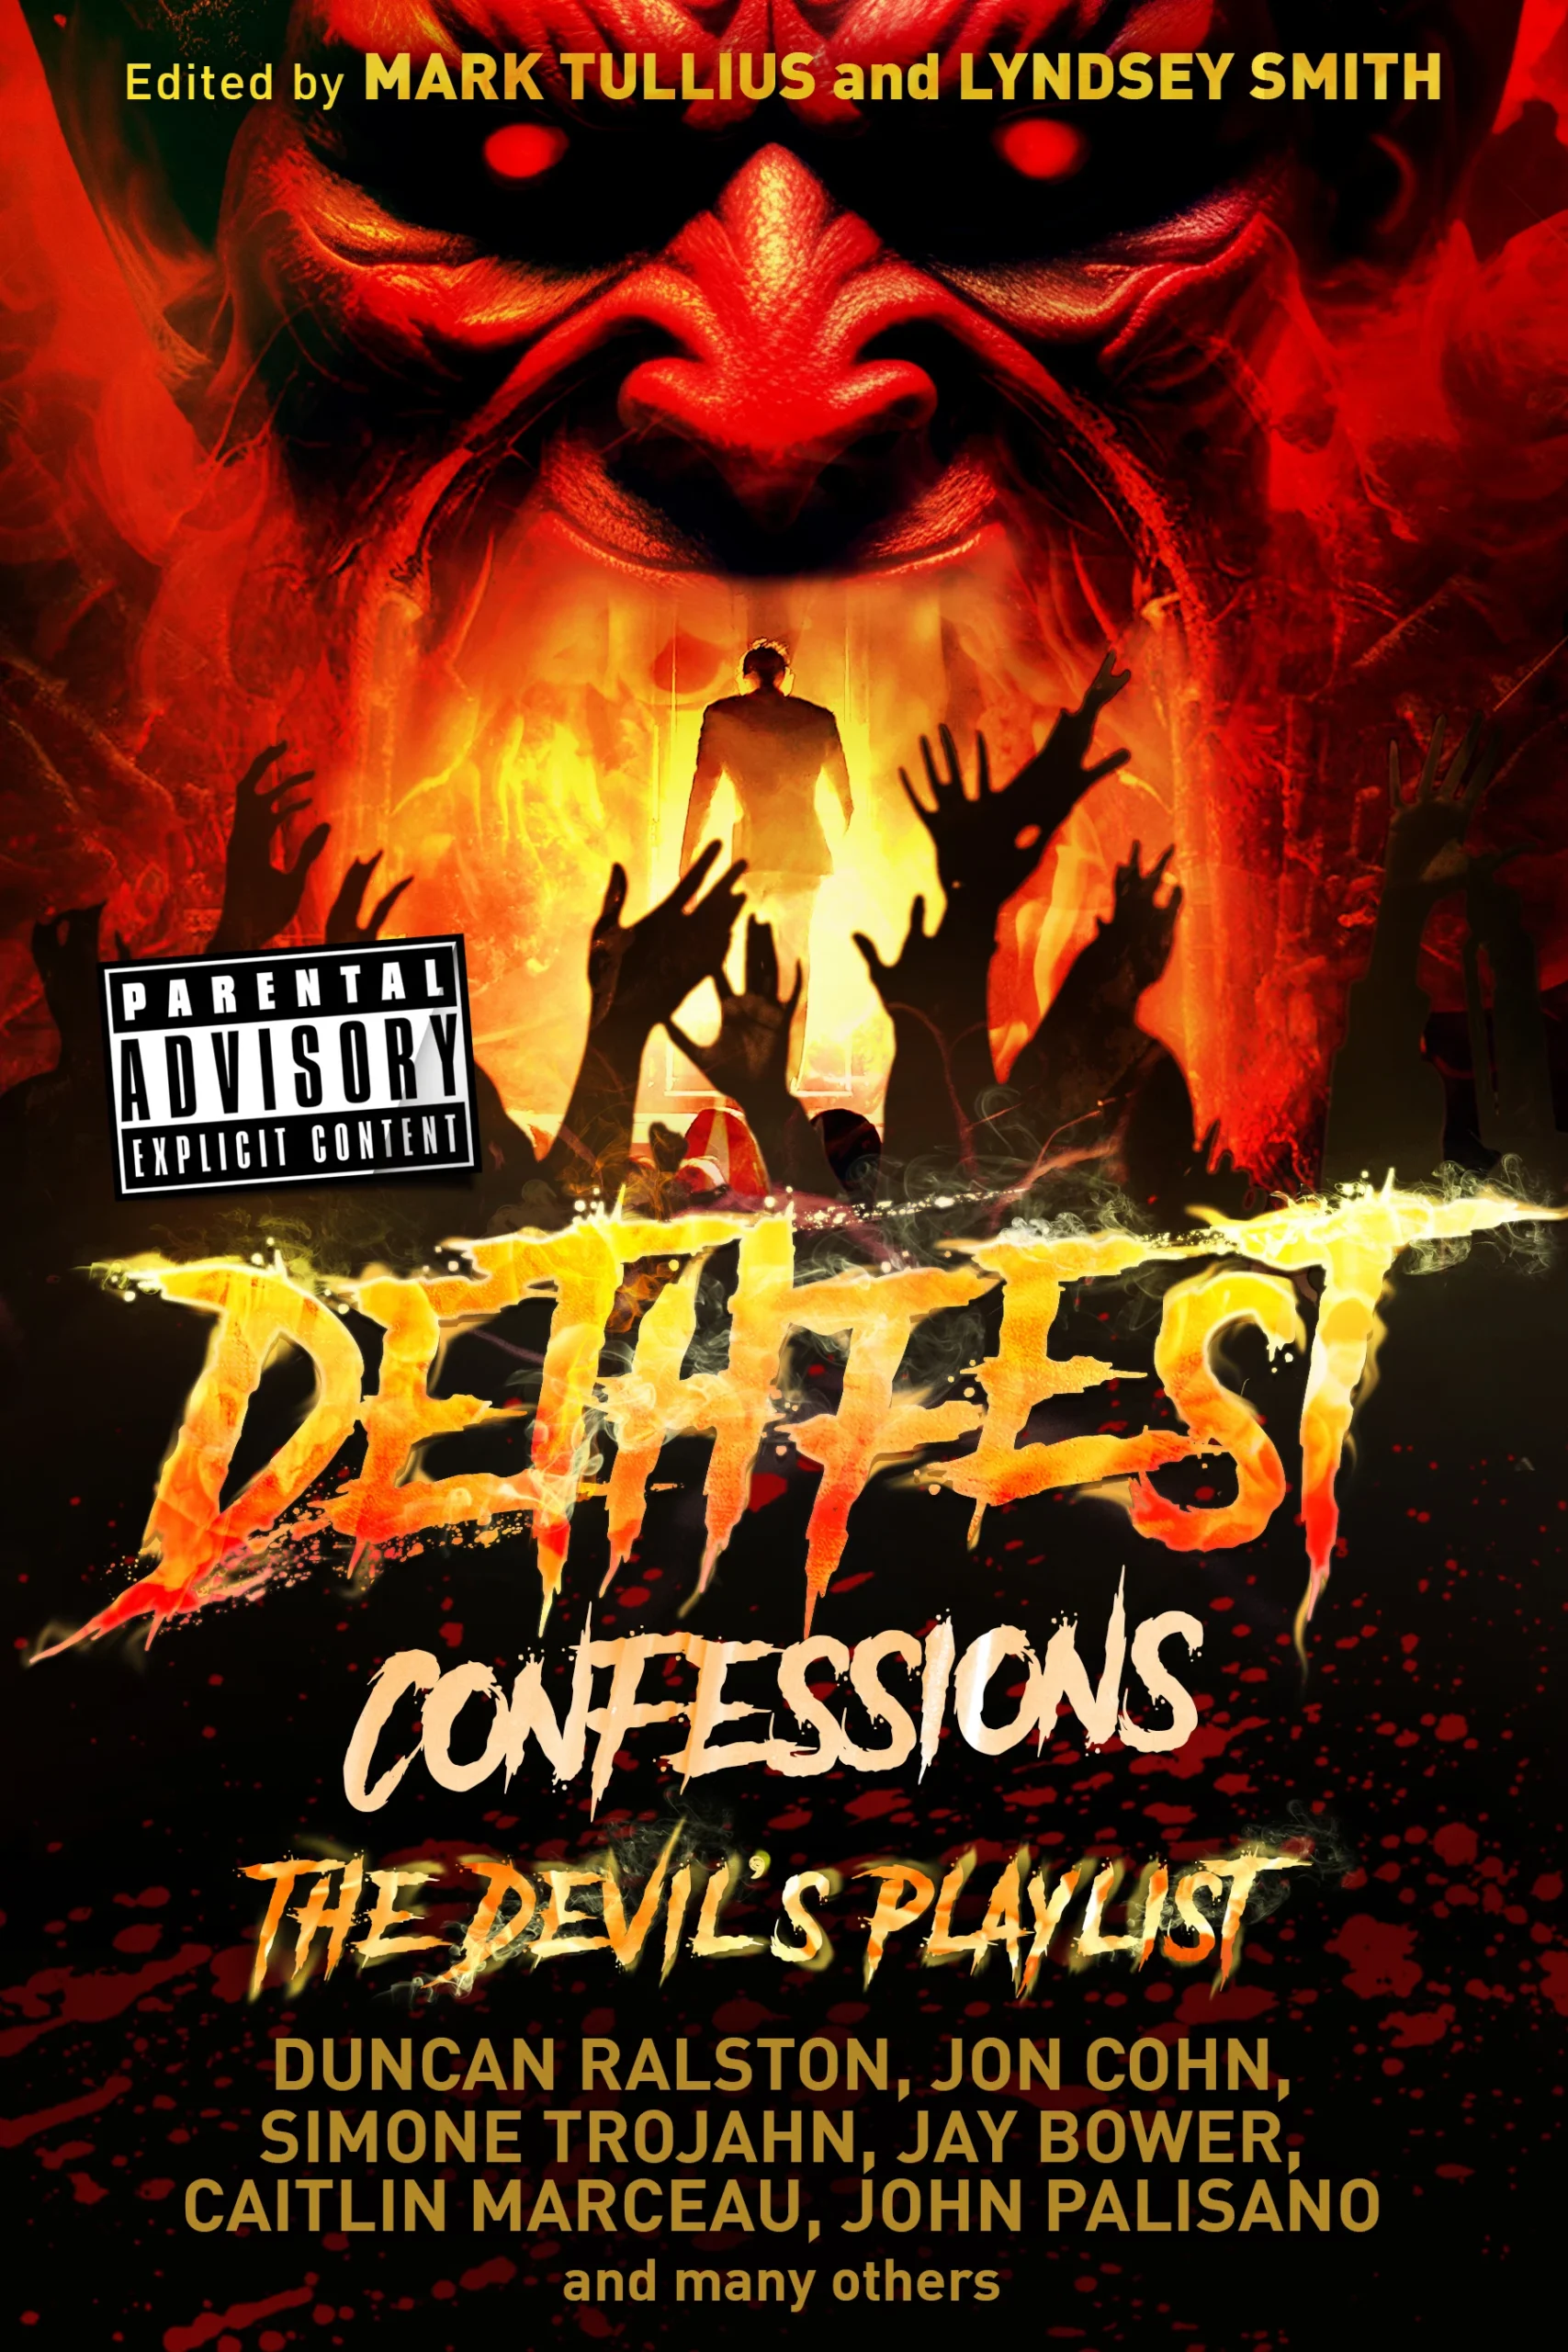 Dethfest Confessions: The Devil’s Playlist